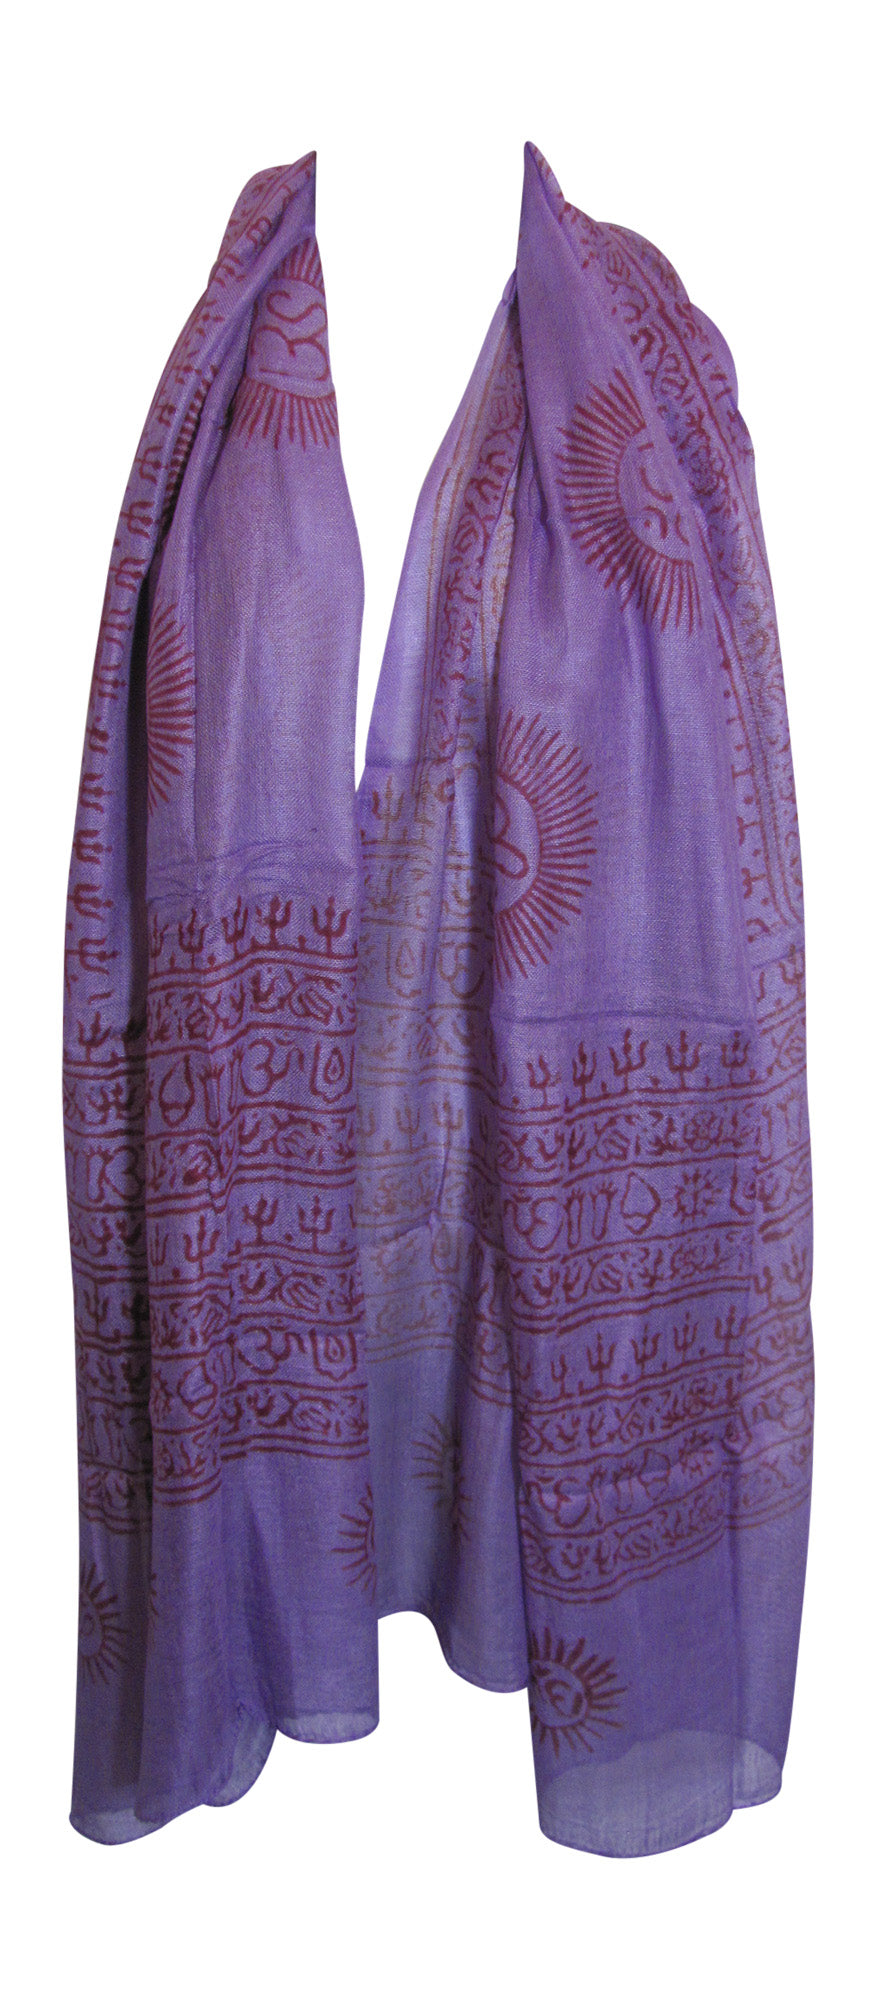 Ethnic Om (Aum) Mantra Sanskrit Block Print Long Indian Cotton Scarf - Ambali Fashion Cotton Scarves accessory, bohemian, boho, casual, classic, eastern, ethnic, gypsy, hippie, meditation, ne